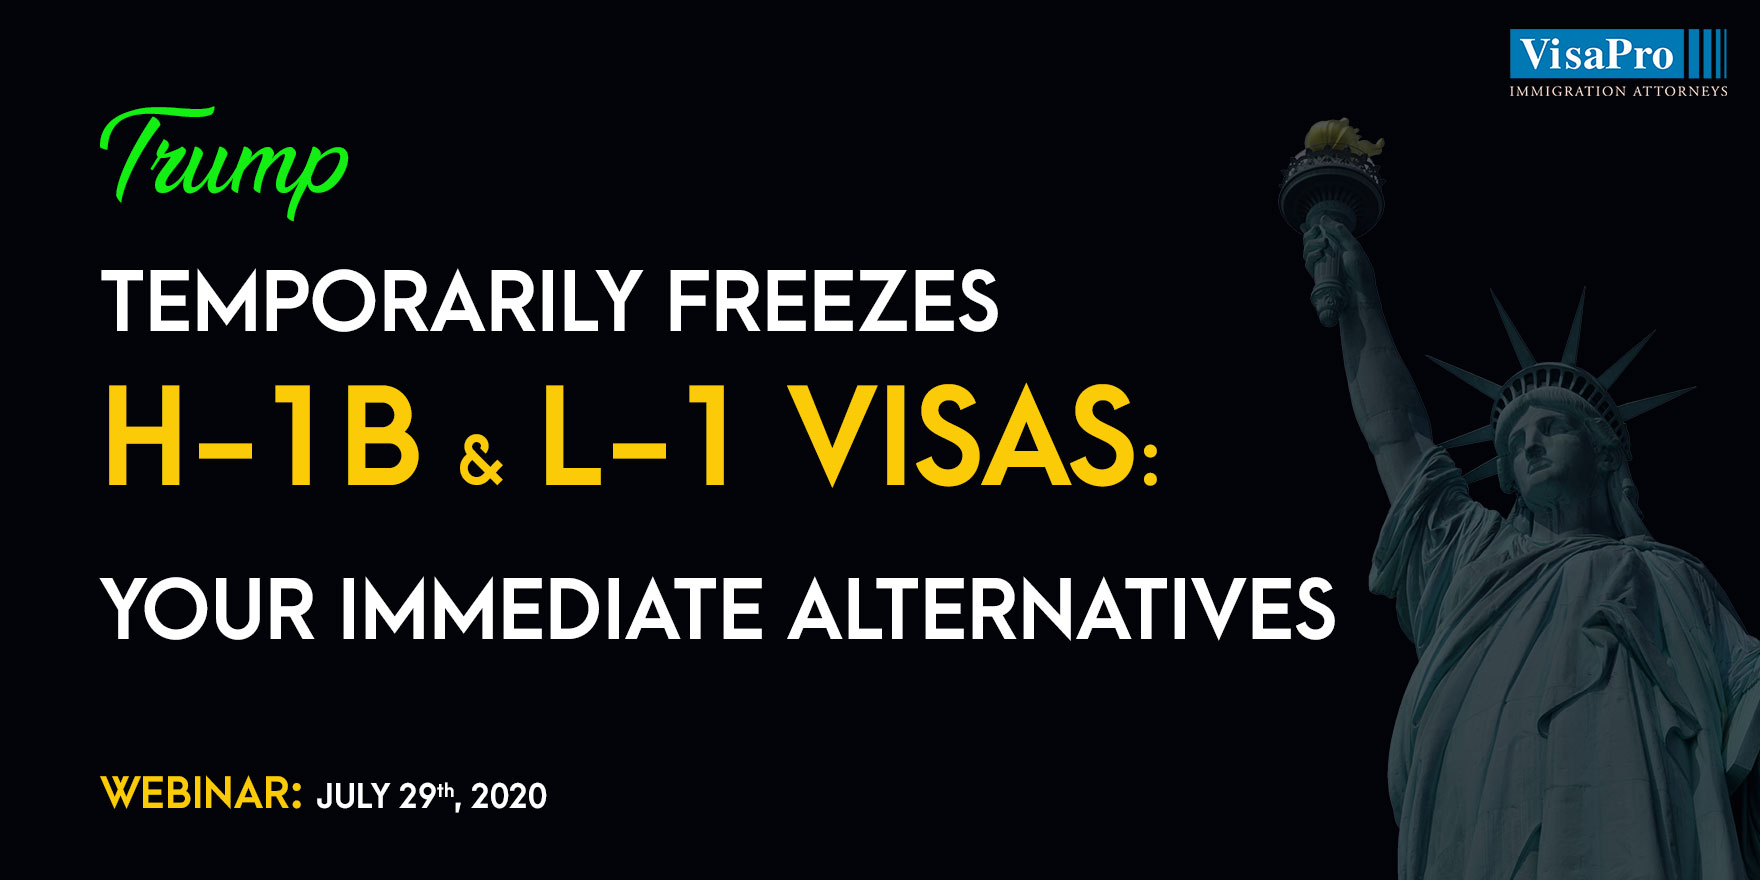 Trump Temporarily Freezes H-1B & L-1 Visas: Your Immediate Alternatives, São Paulo, Sao Paulo, Brazil